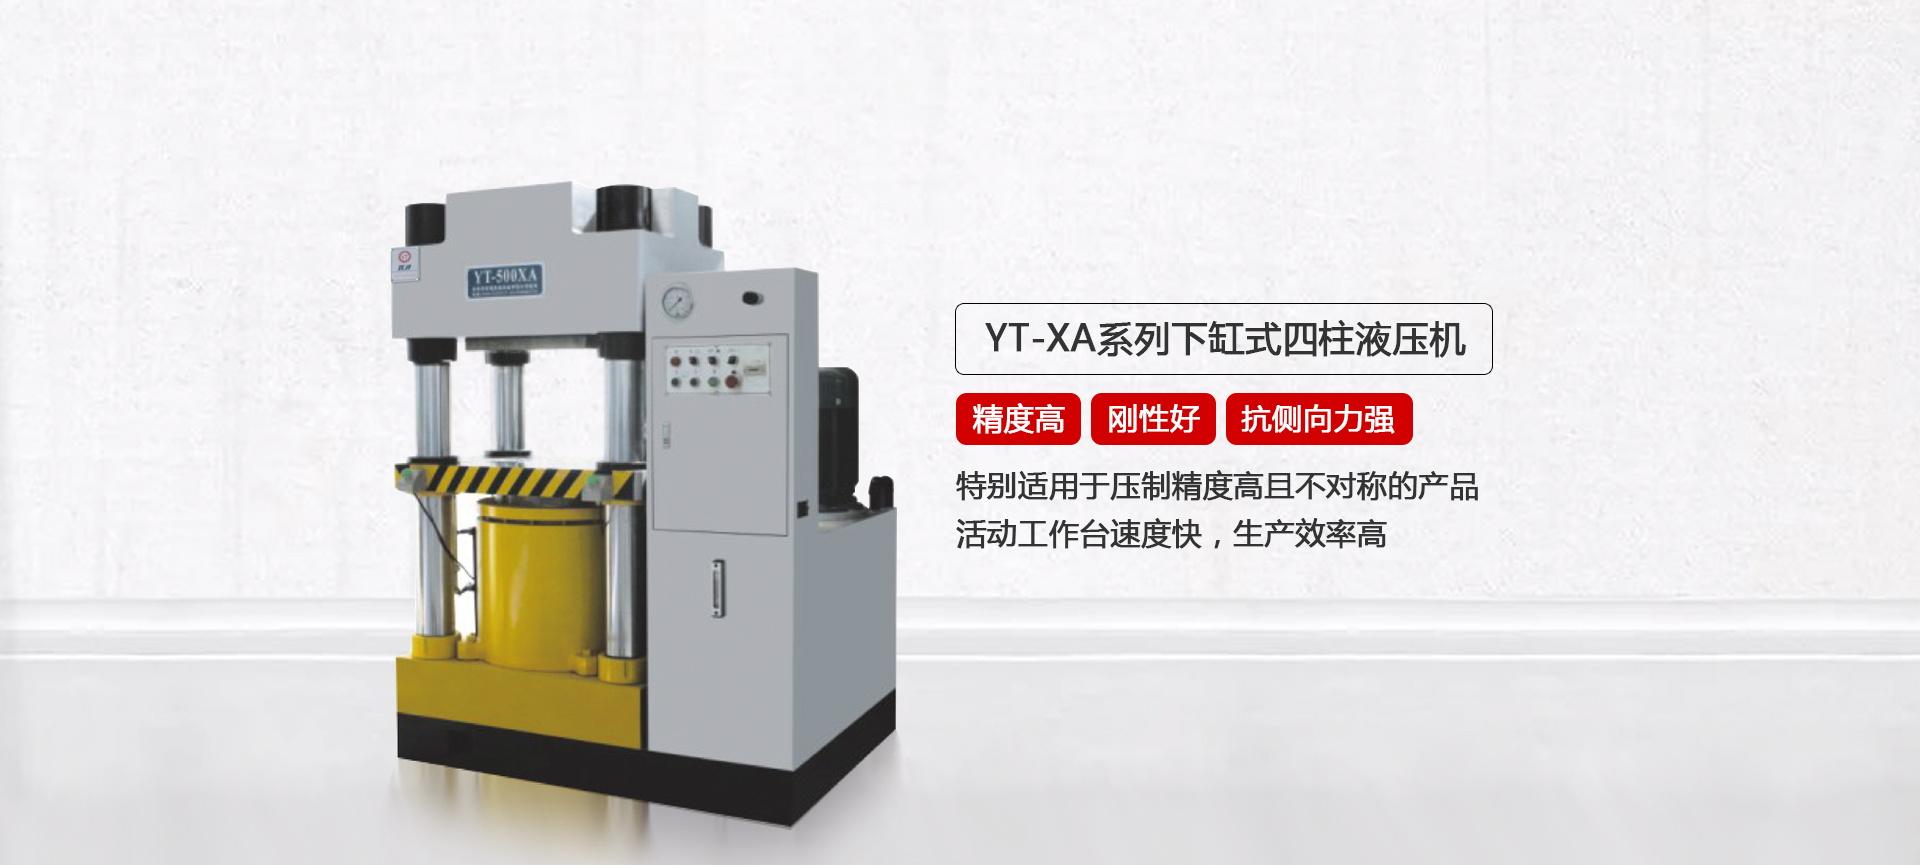 YTP系列拼图油压机